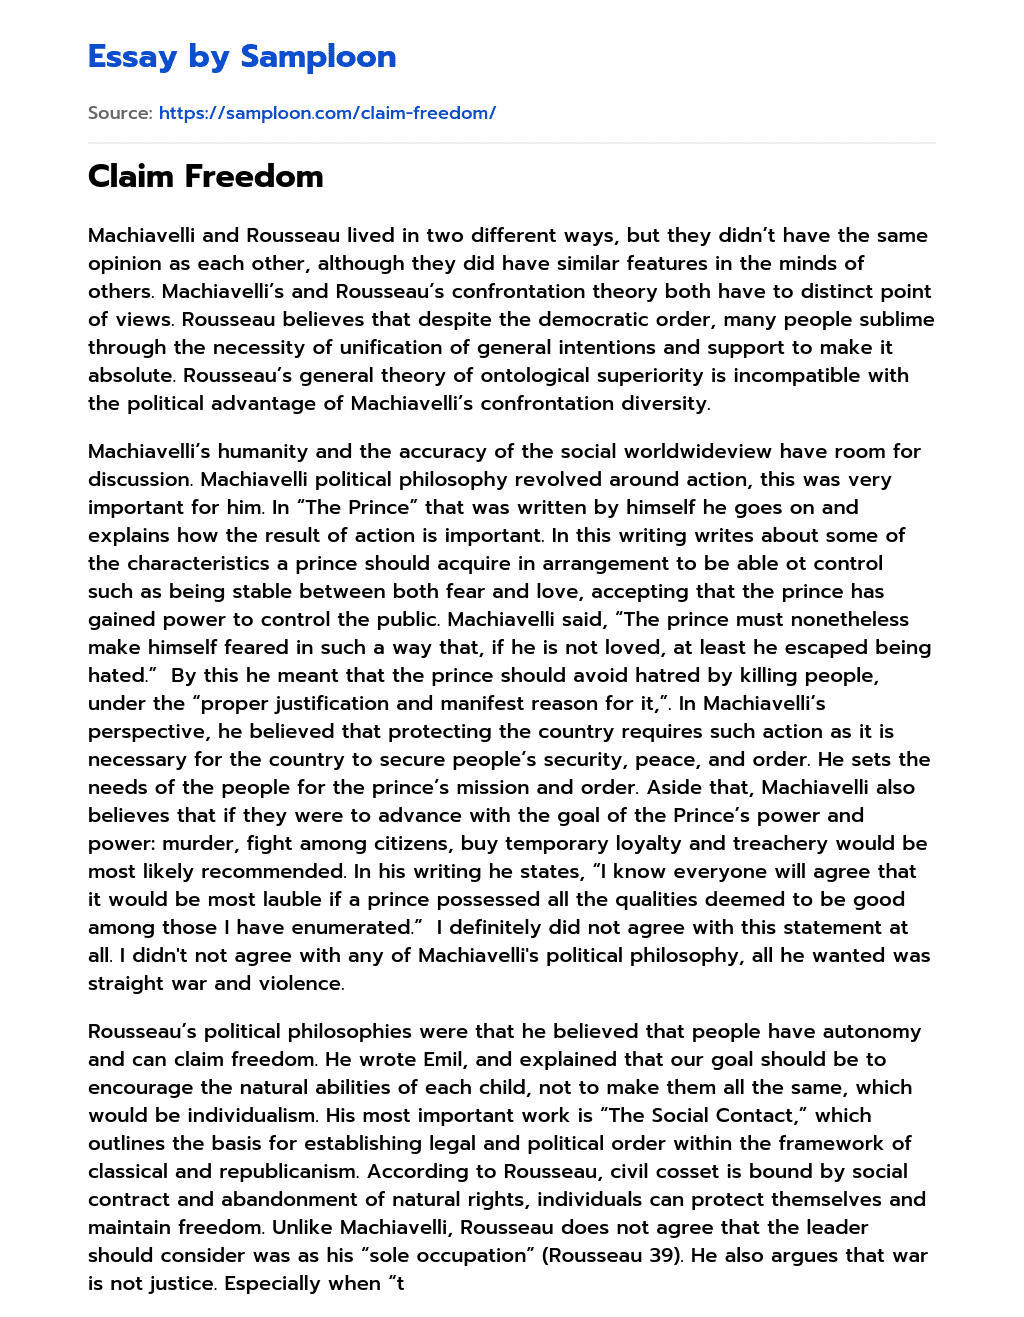 Claim Freedom essay